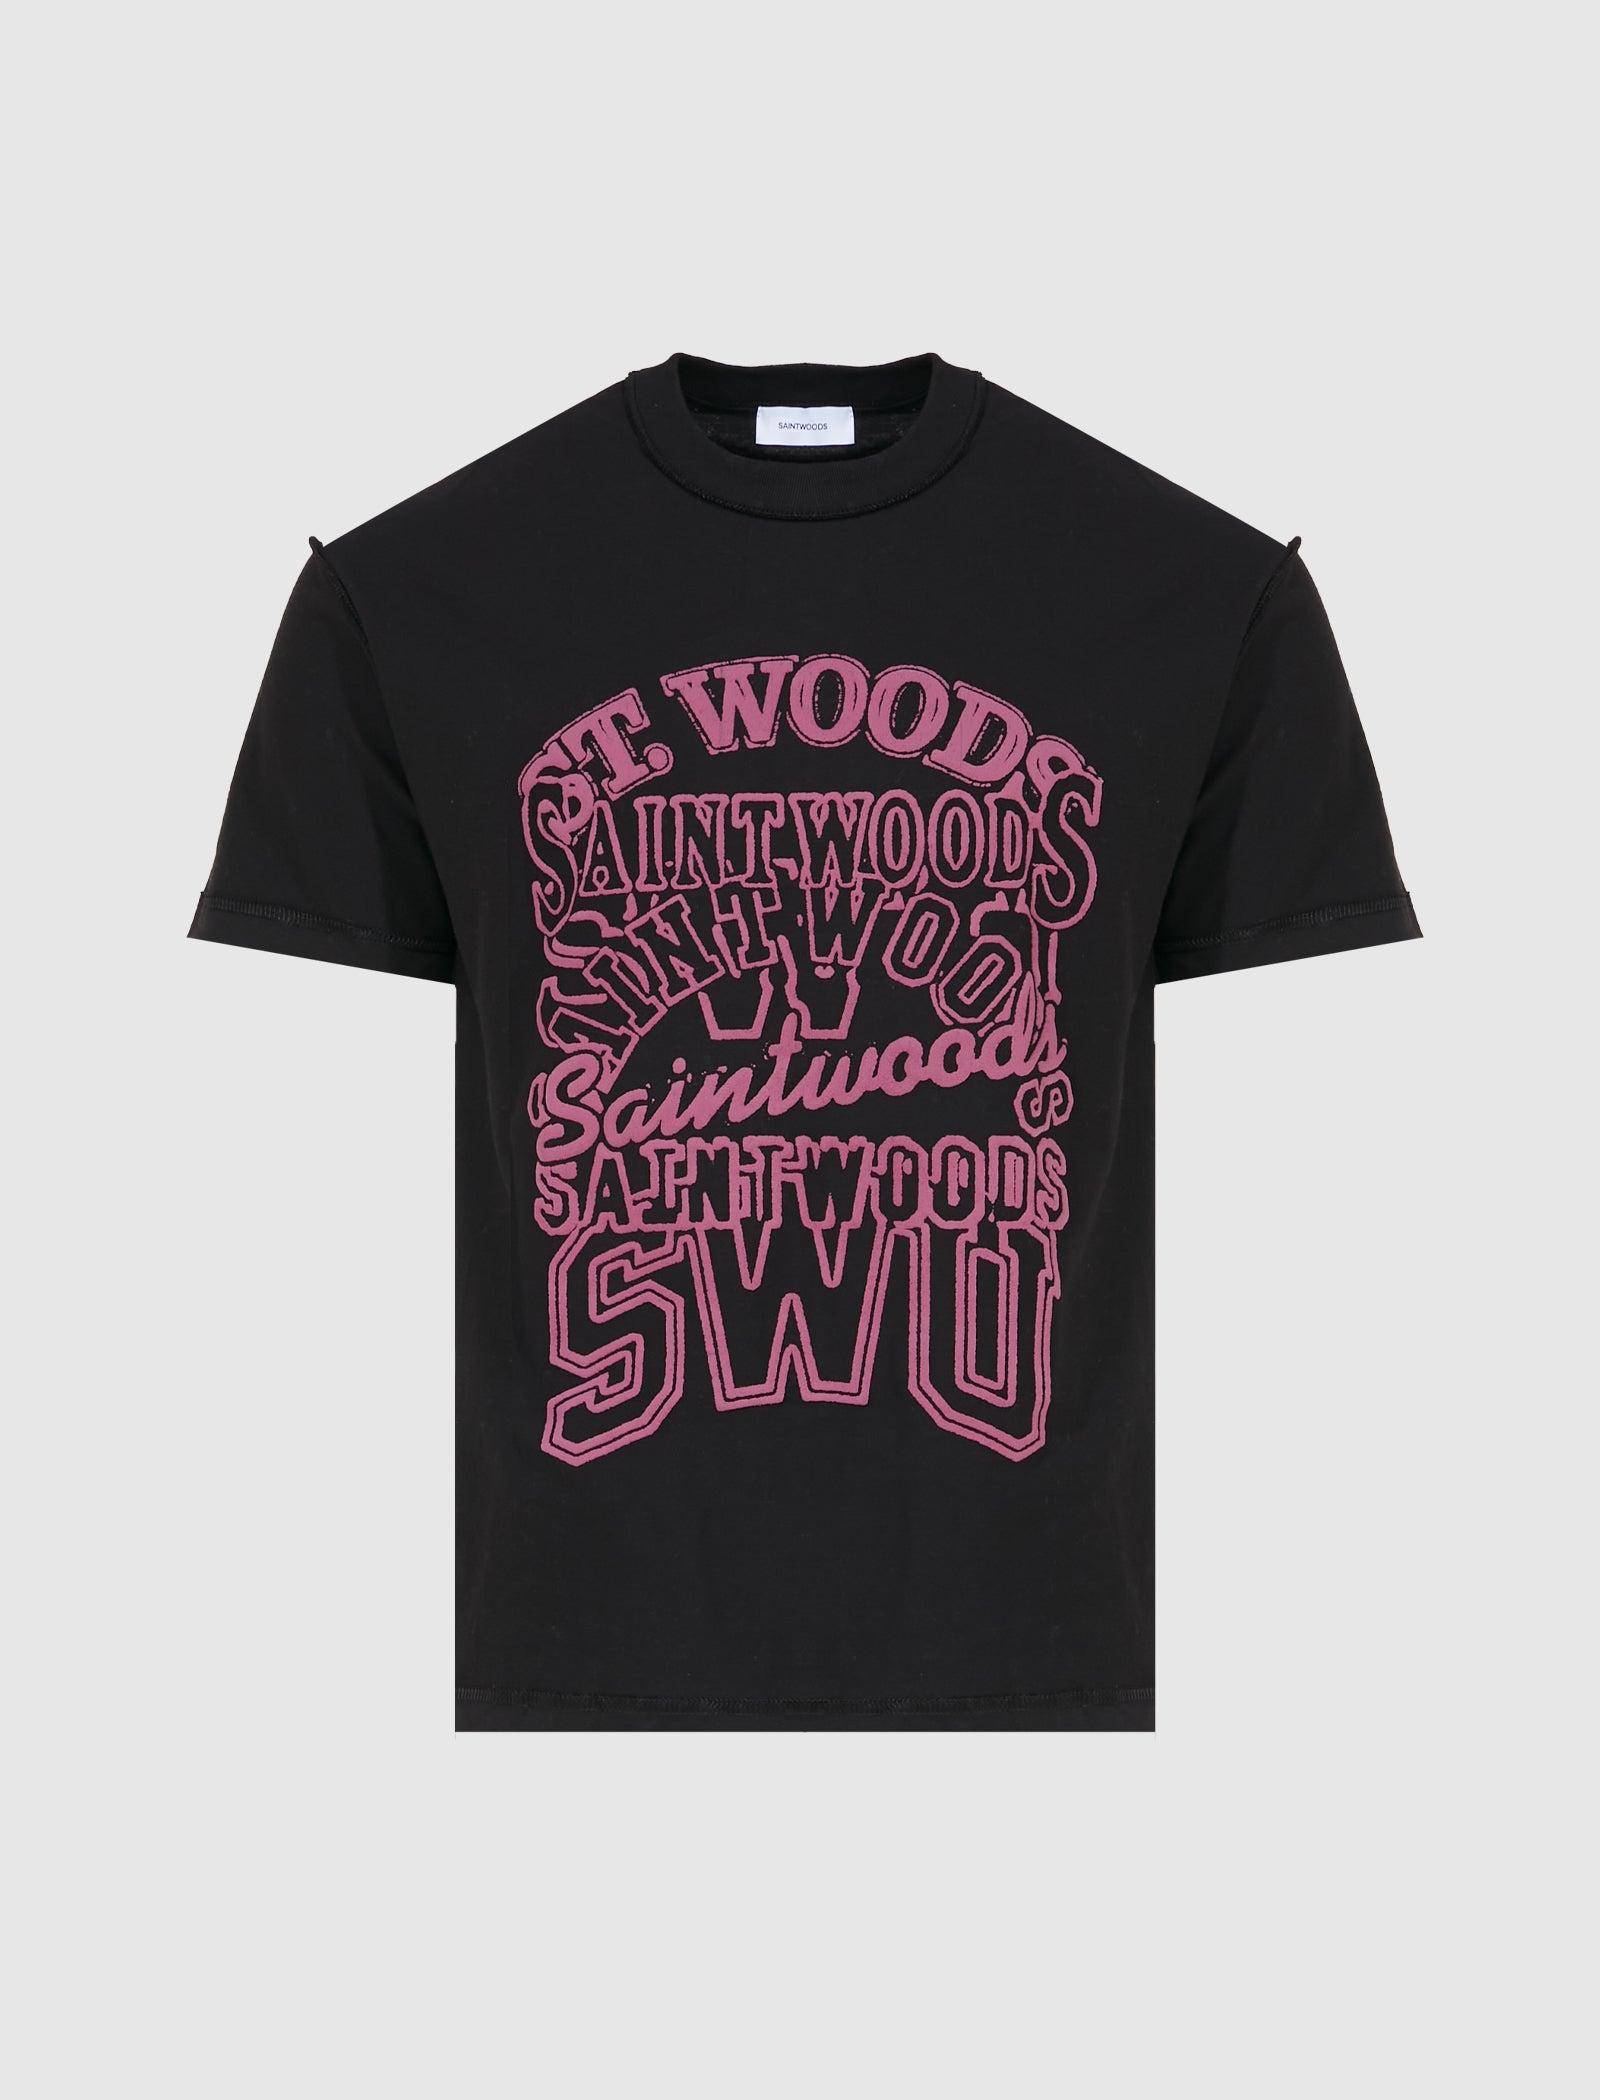 SAINTWOODS Seven T-shirt for Men | Lyst